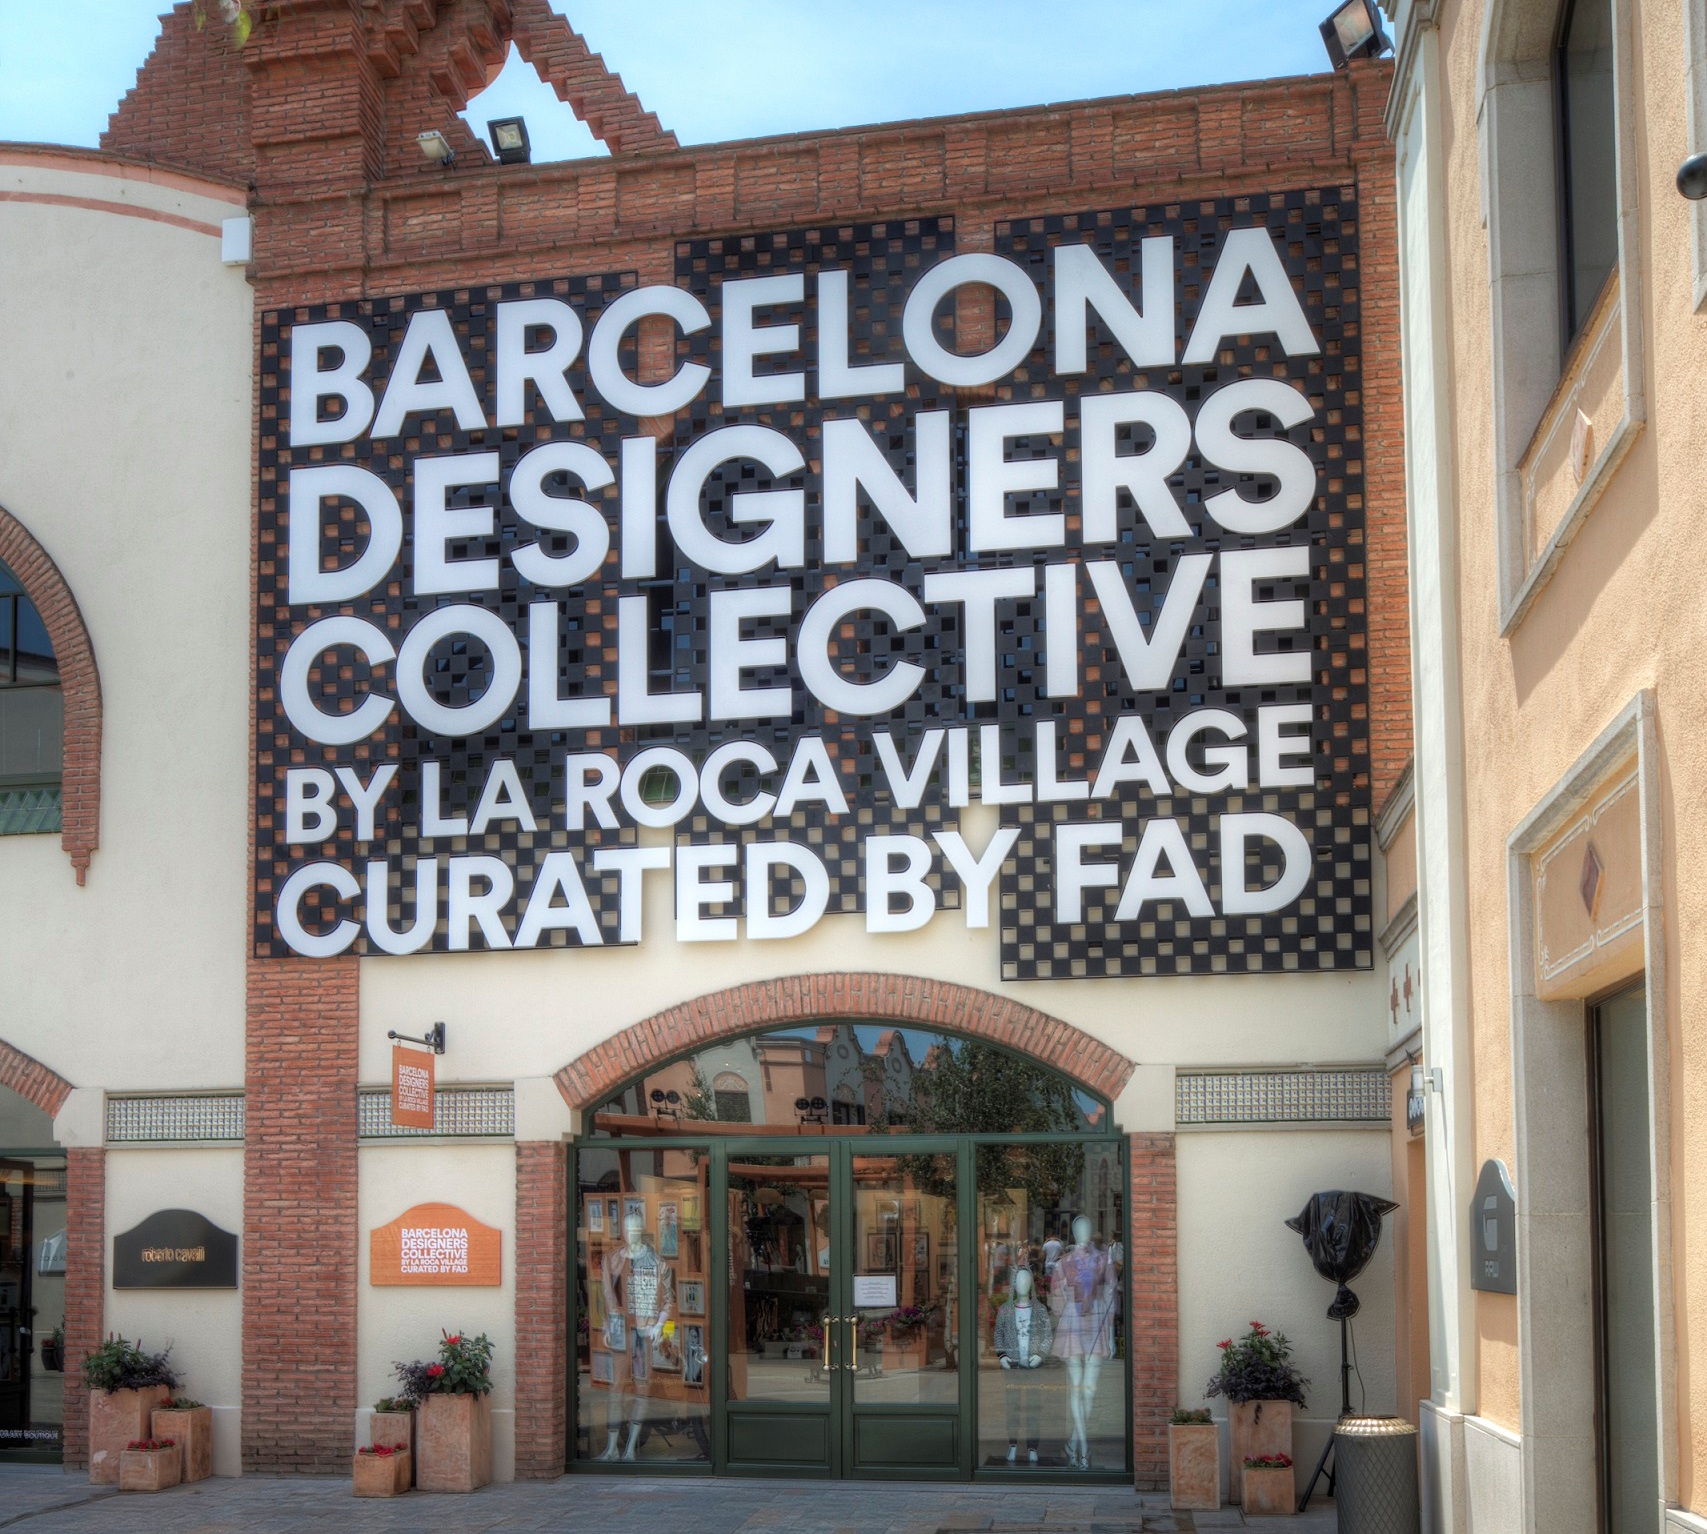 Barcelona-Designers-Collective